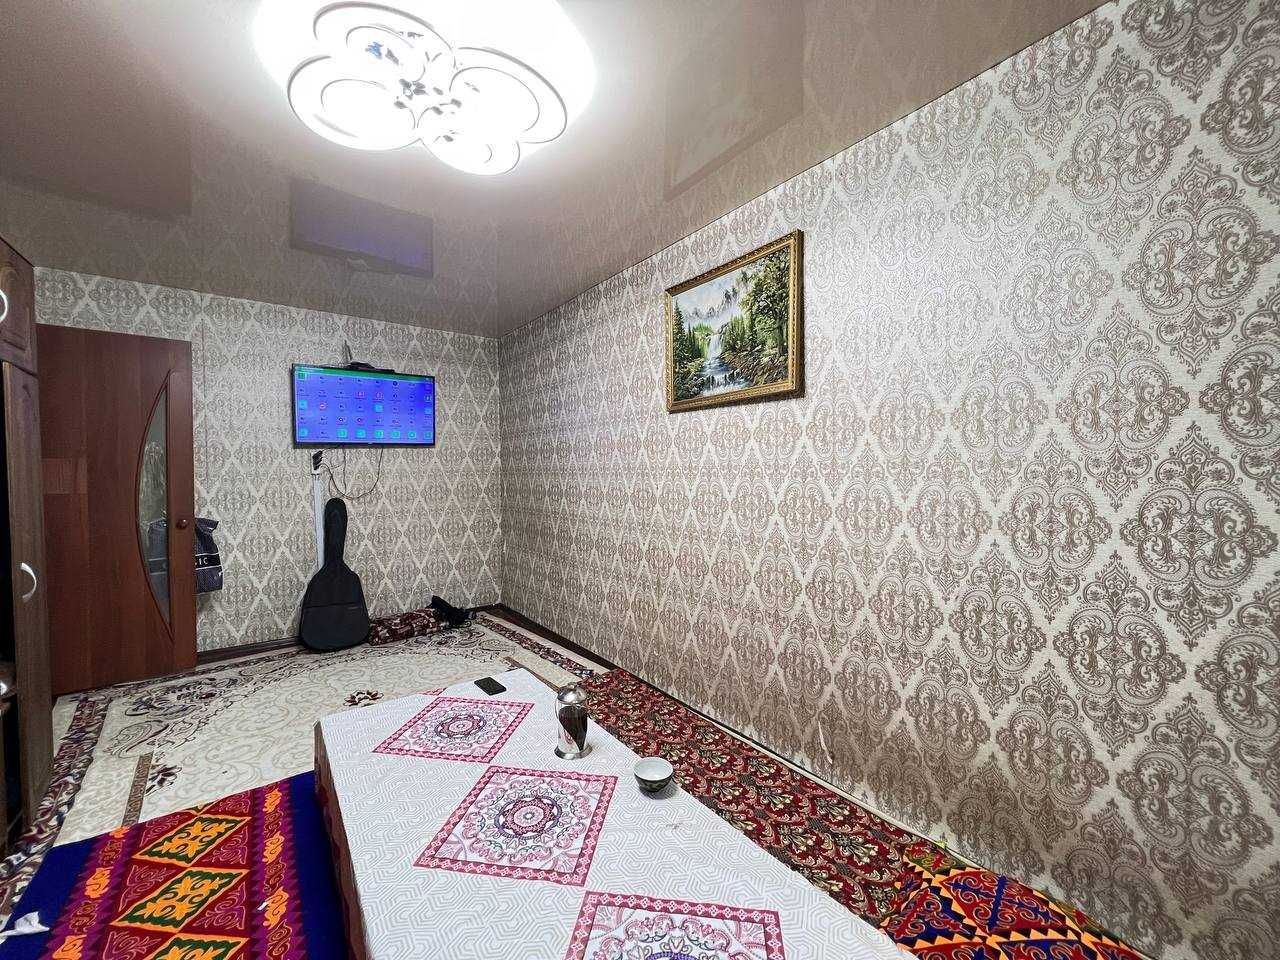 Продается 3-ех комнатная квартира в Шахтинске на 31 кв. Торг, Ипотека